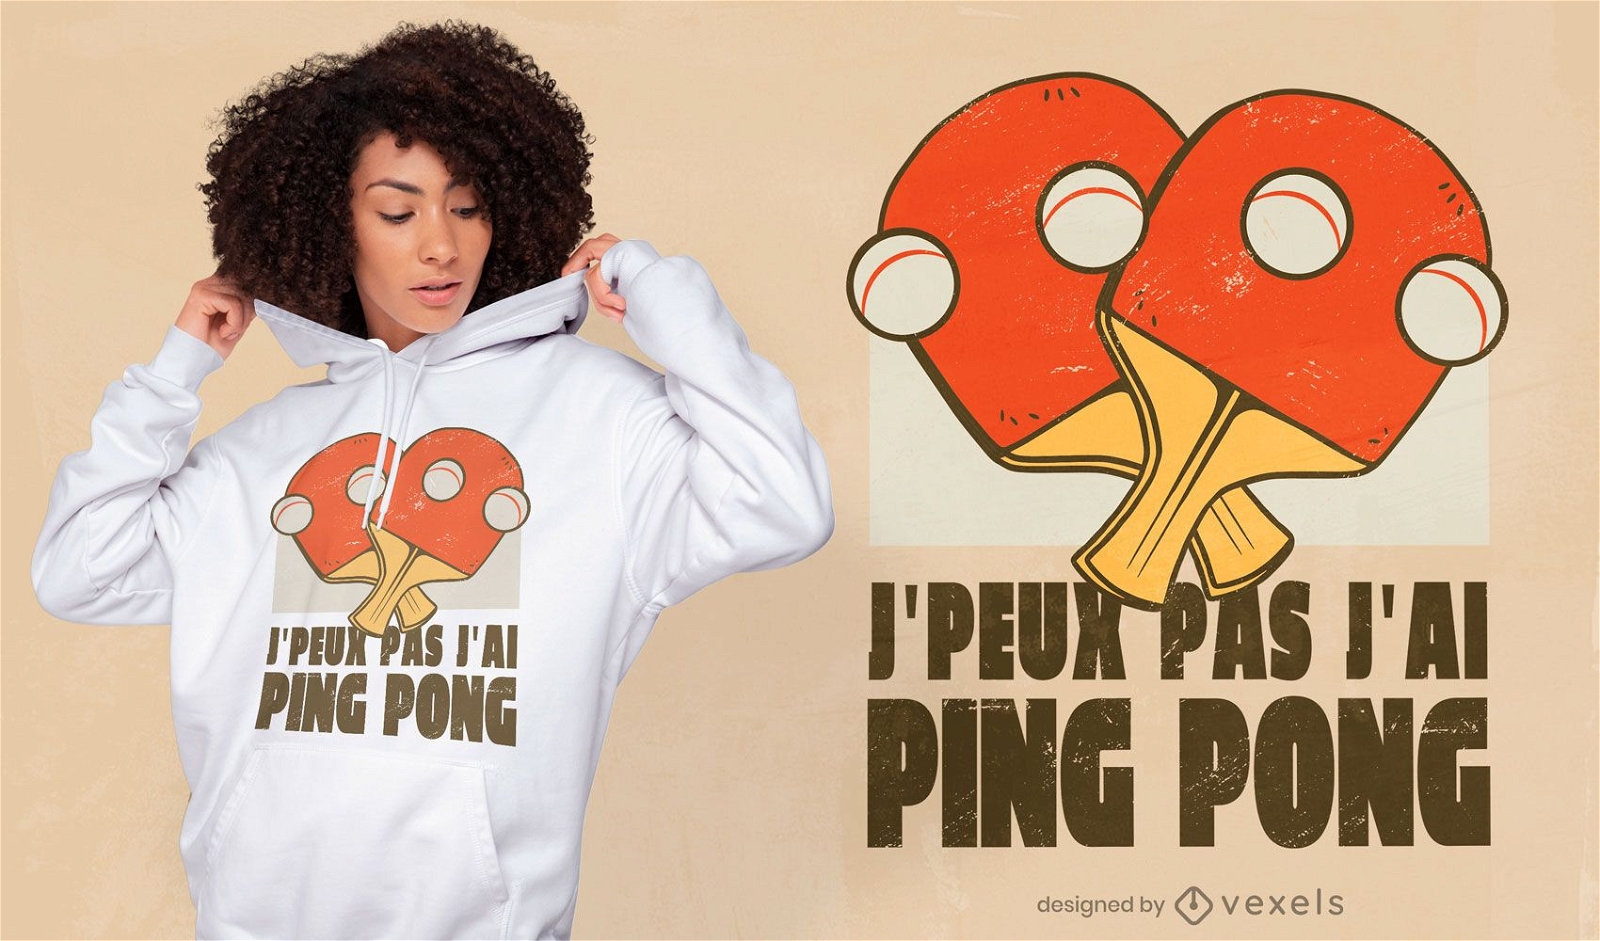 Dise?o de camiseta de cita deportiva de ping pong